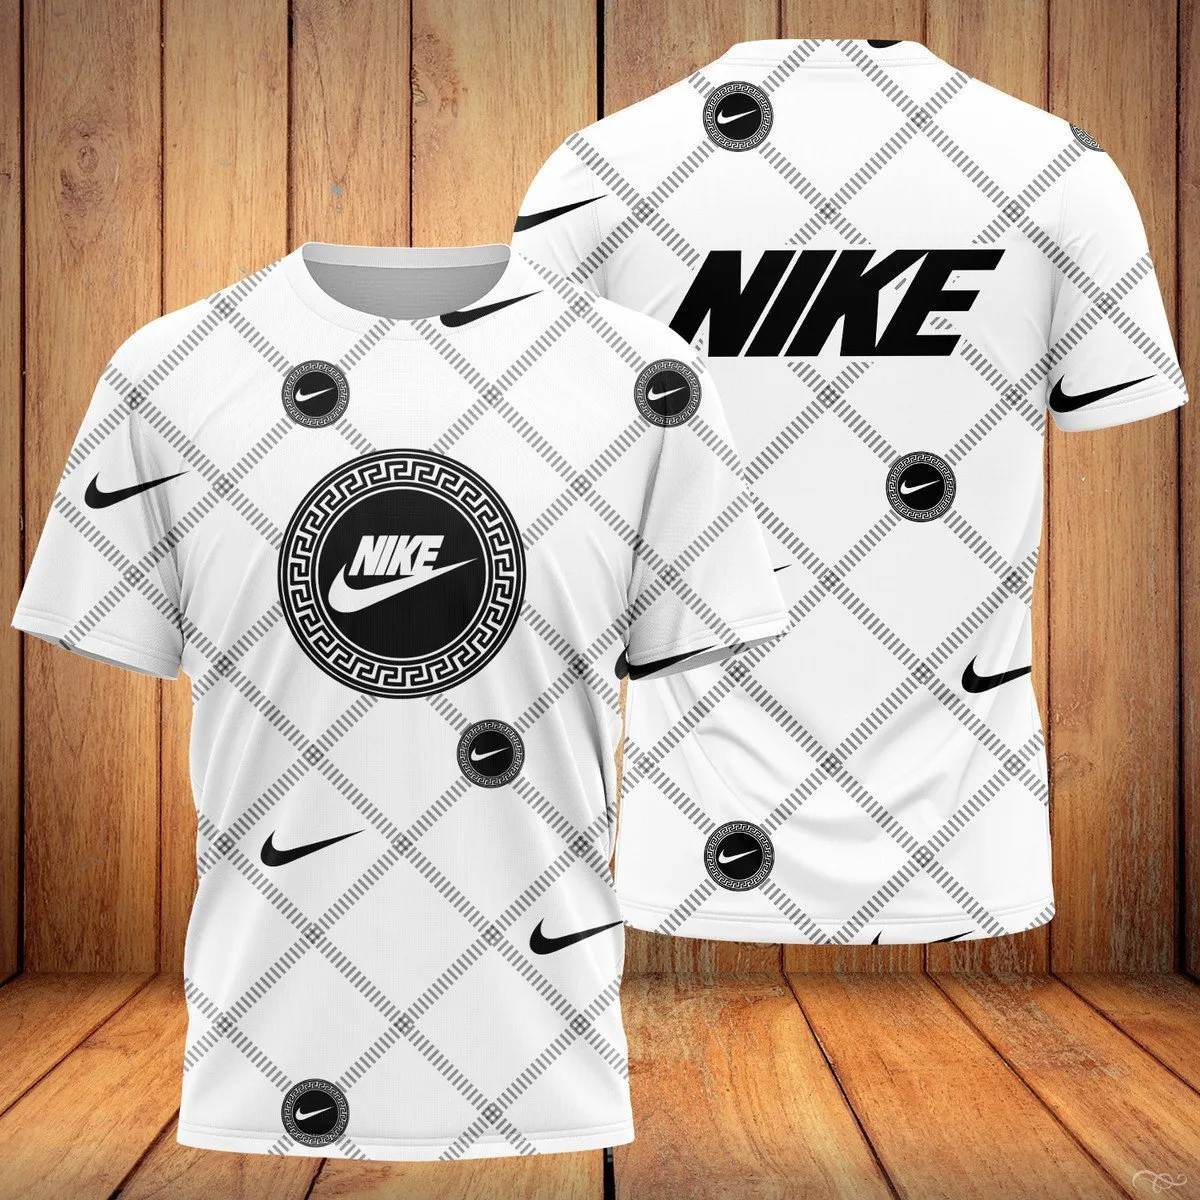 Nike White Pattern T Shirt Outfit Fashion Luxury